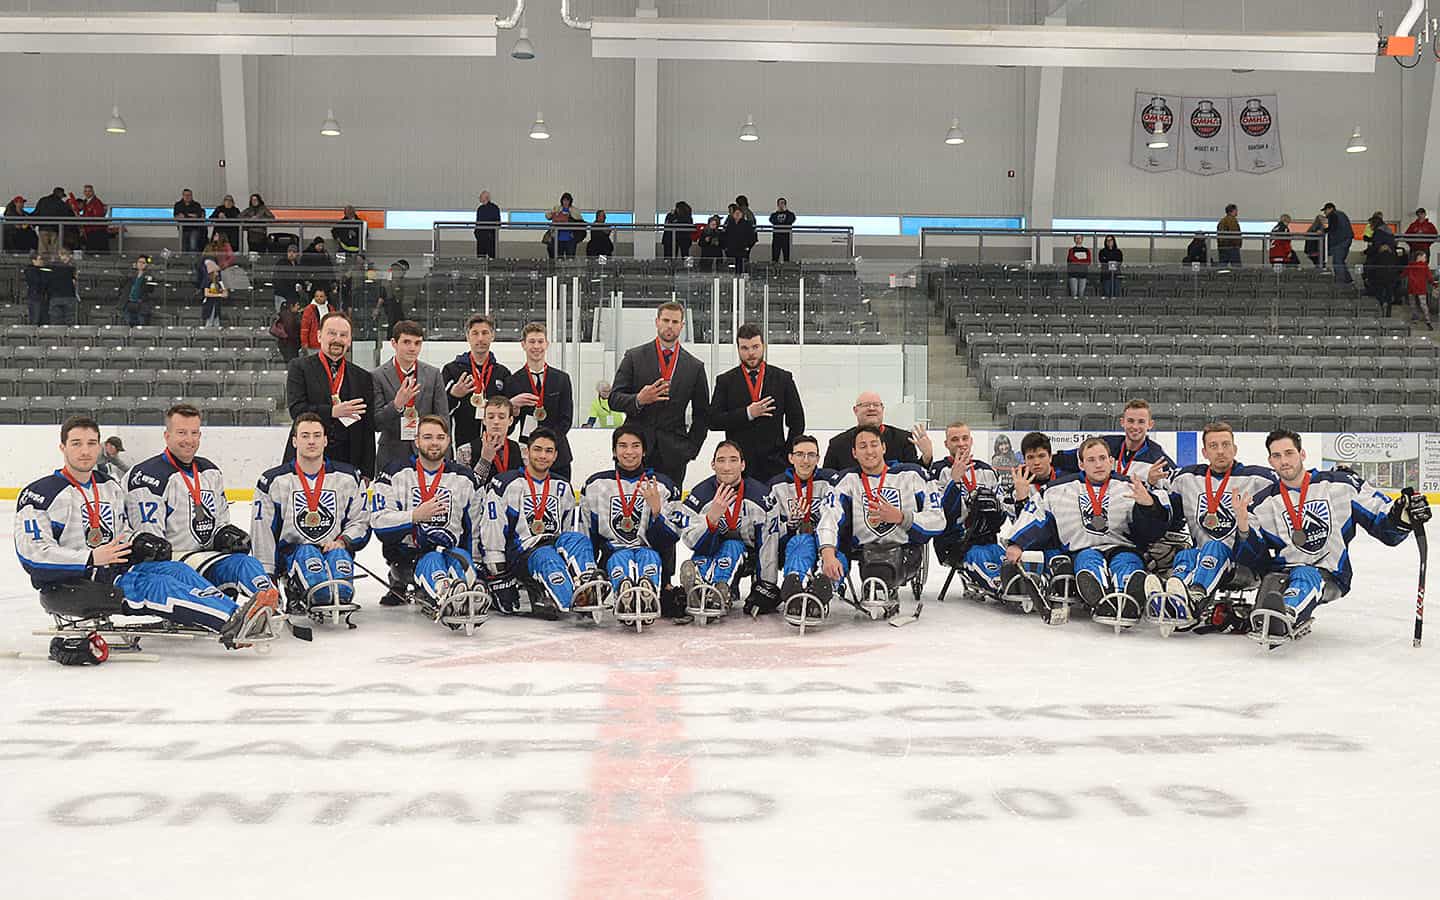 Team Alberta claims sledge hockey gold